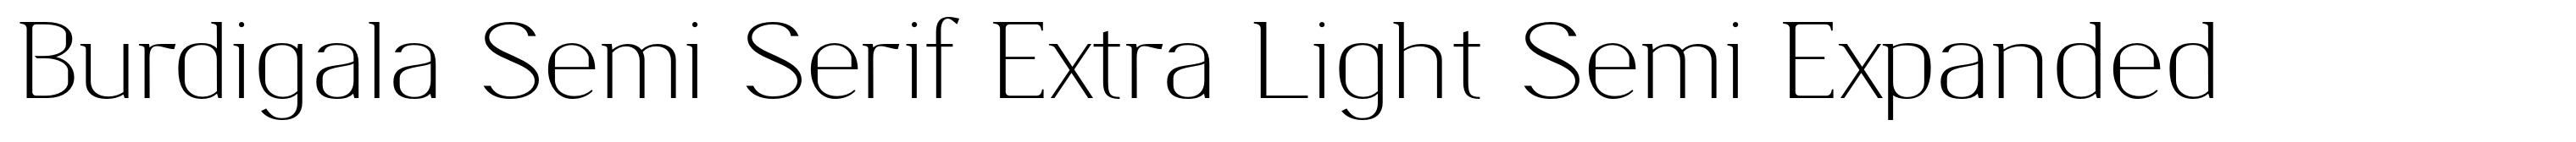 Burdigala Semi Serif Extra Light Semi Expanded